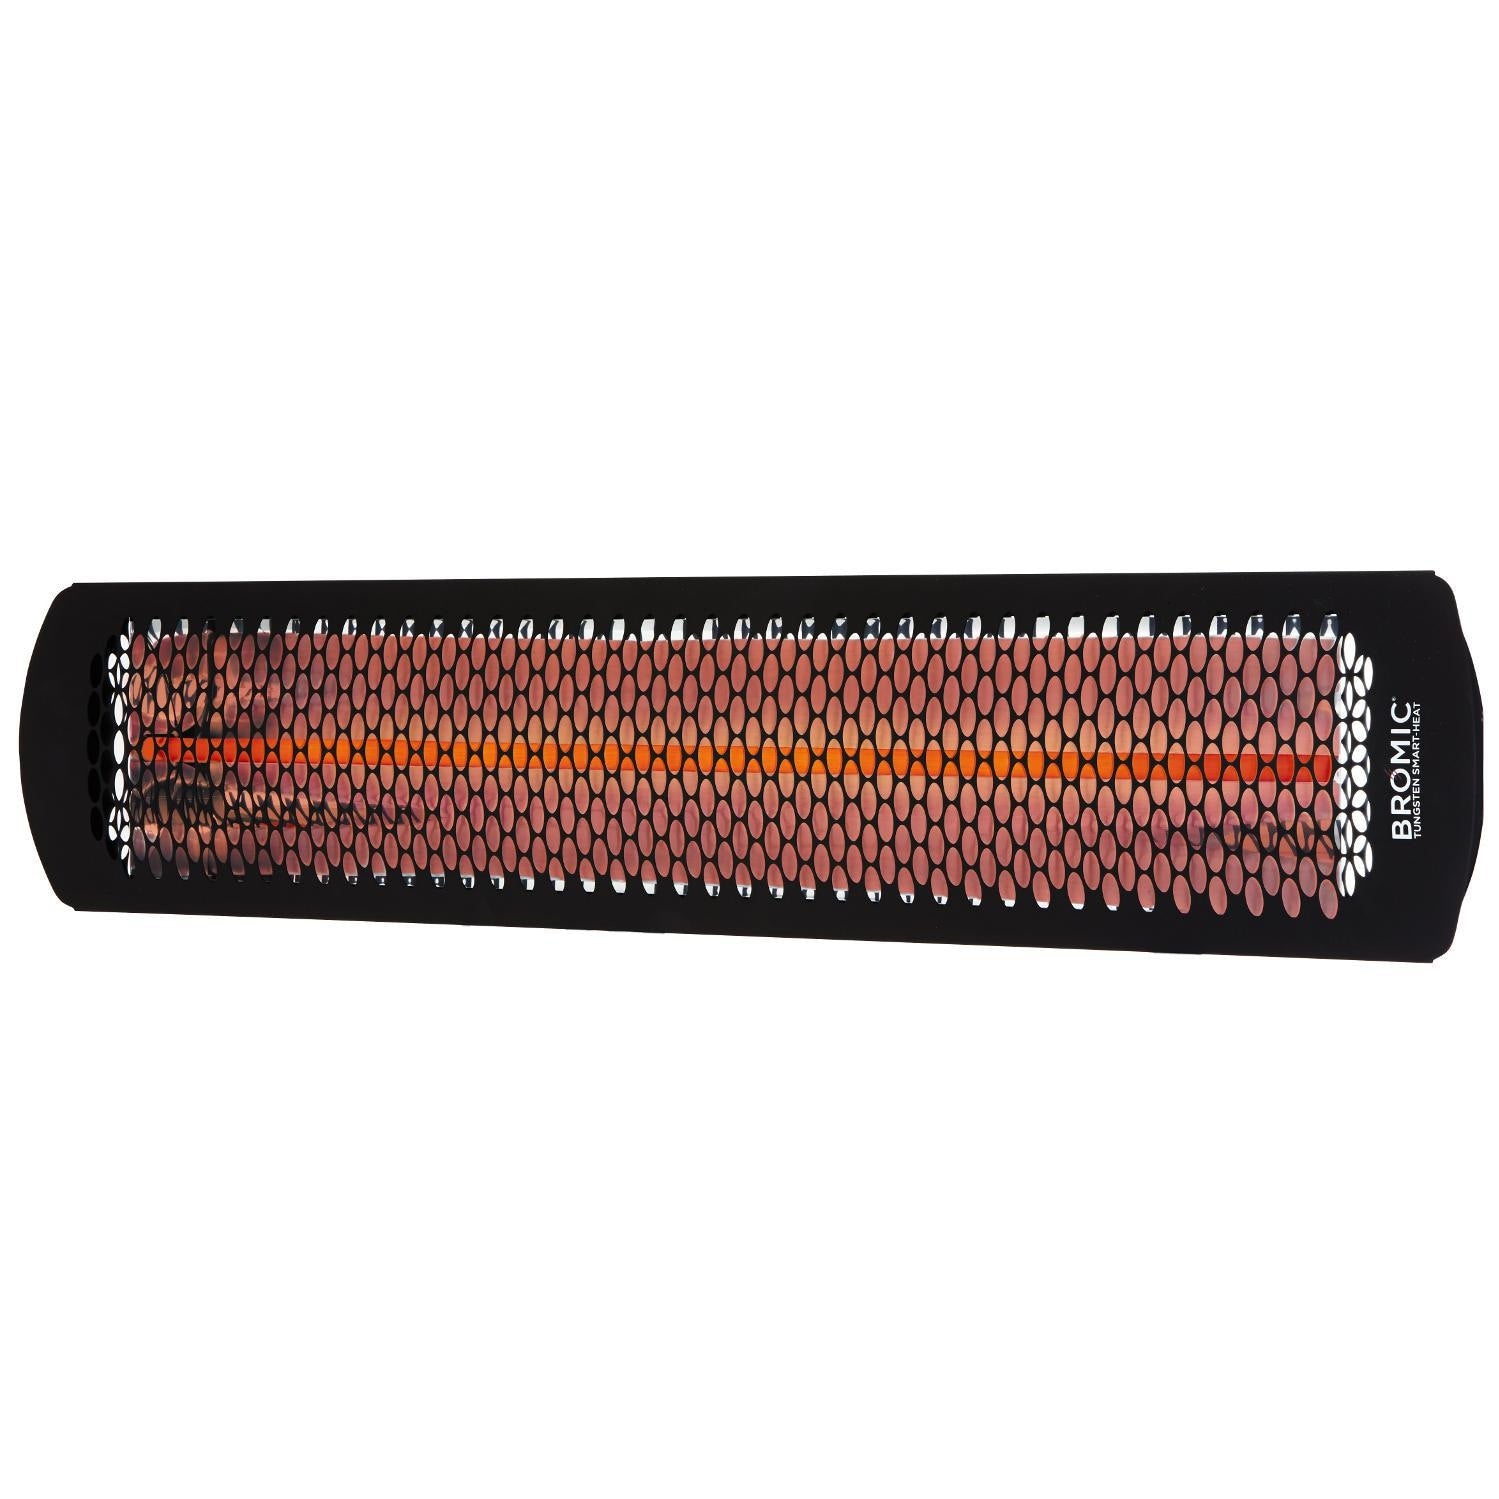 Bromic Heating - Tungsten Smart-Heat 56-Inch 3000W Single Element 240V Electric Infrared Patio Heater - Black